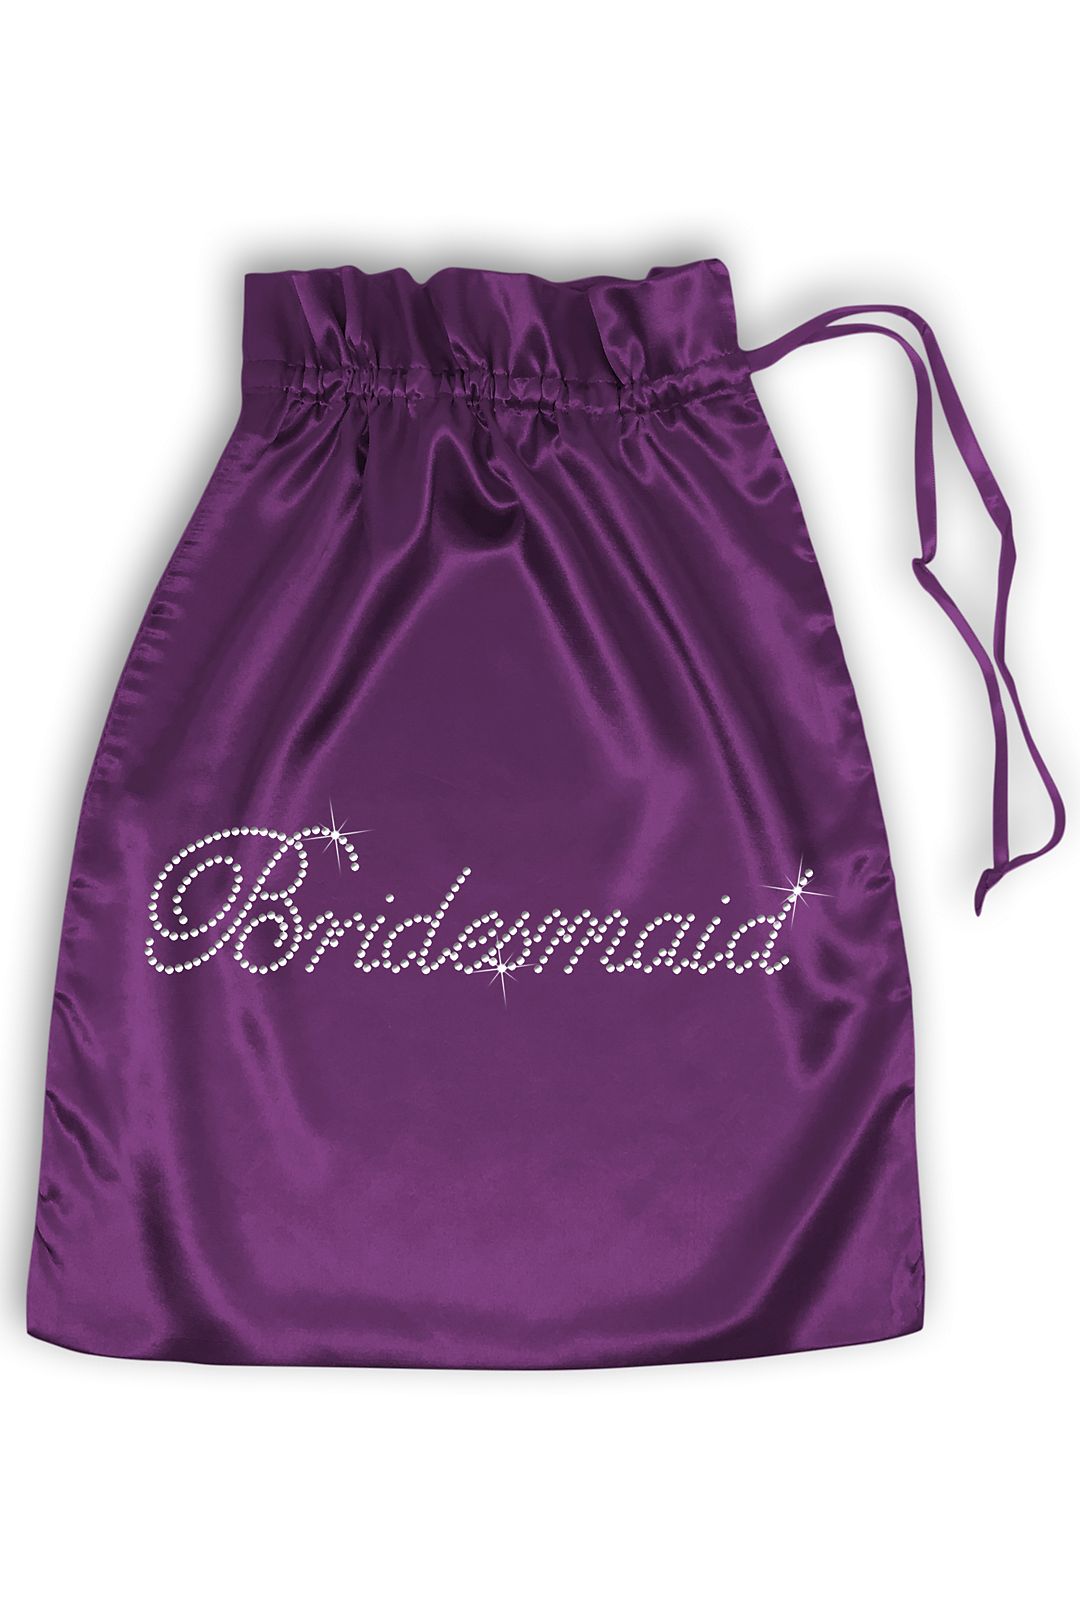 Rhinestone Bridesmaid Satin Bag Image 1